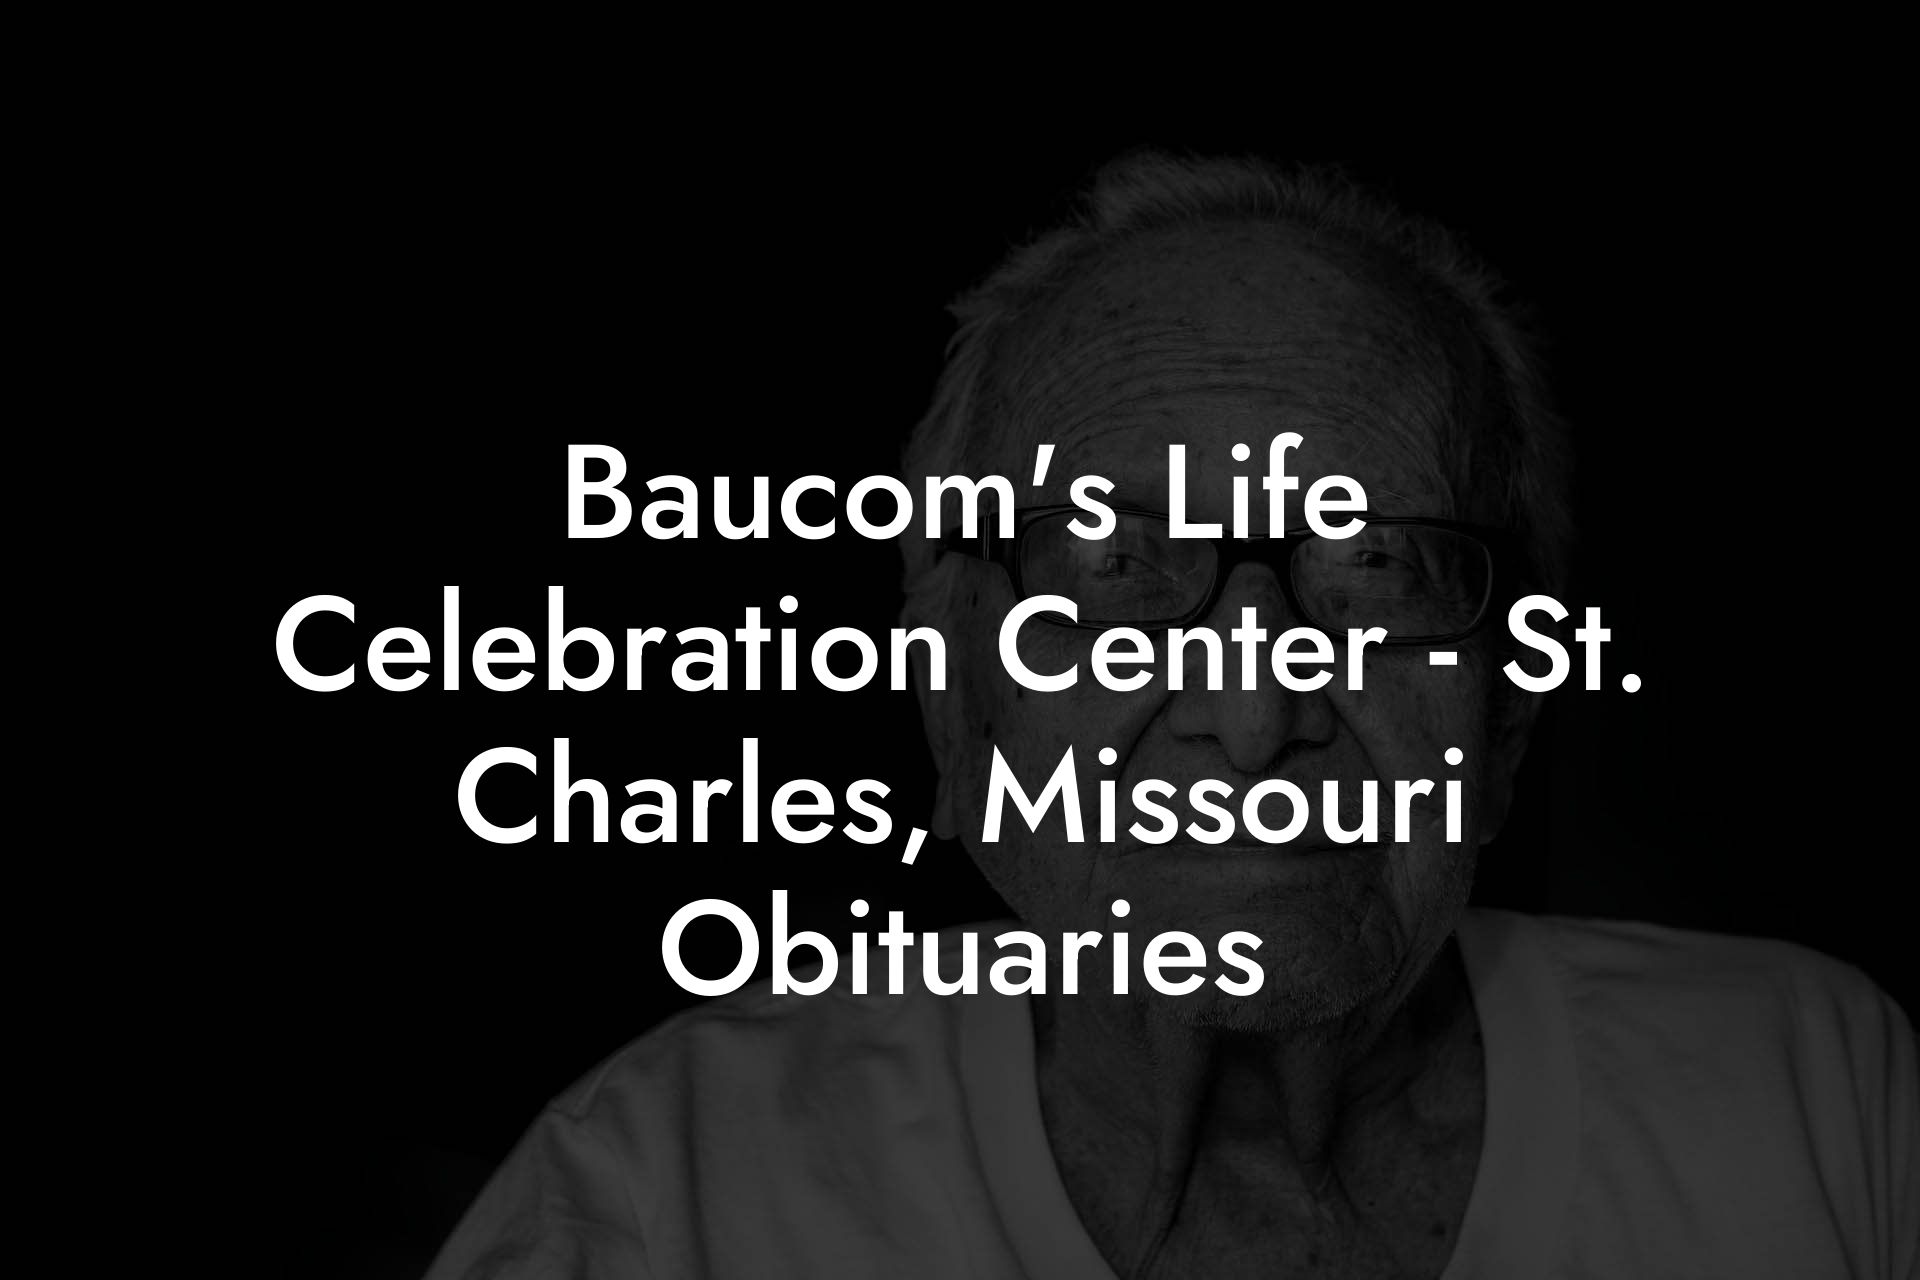 Baucom's Life Celebration Center - St. Charles, Missouri Obituaries